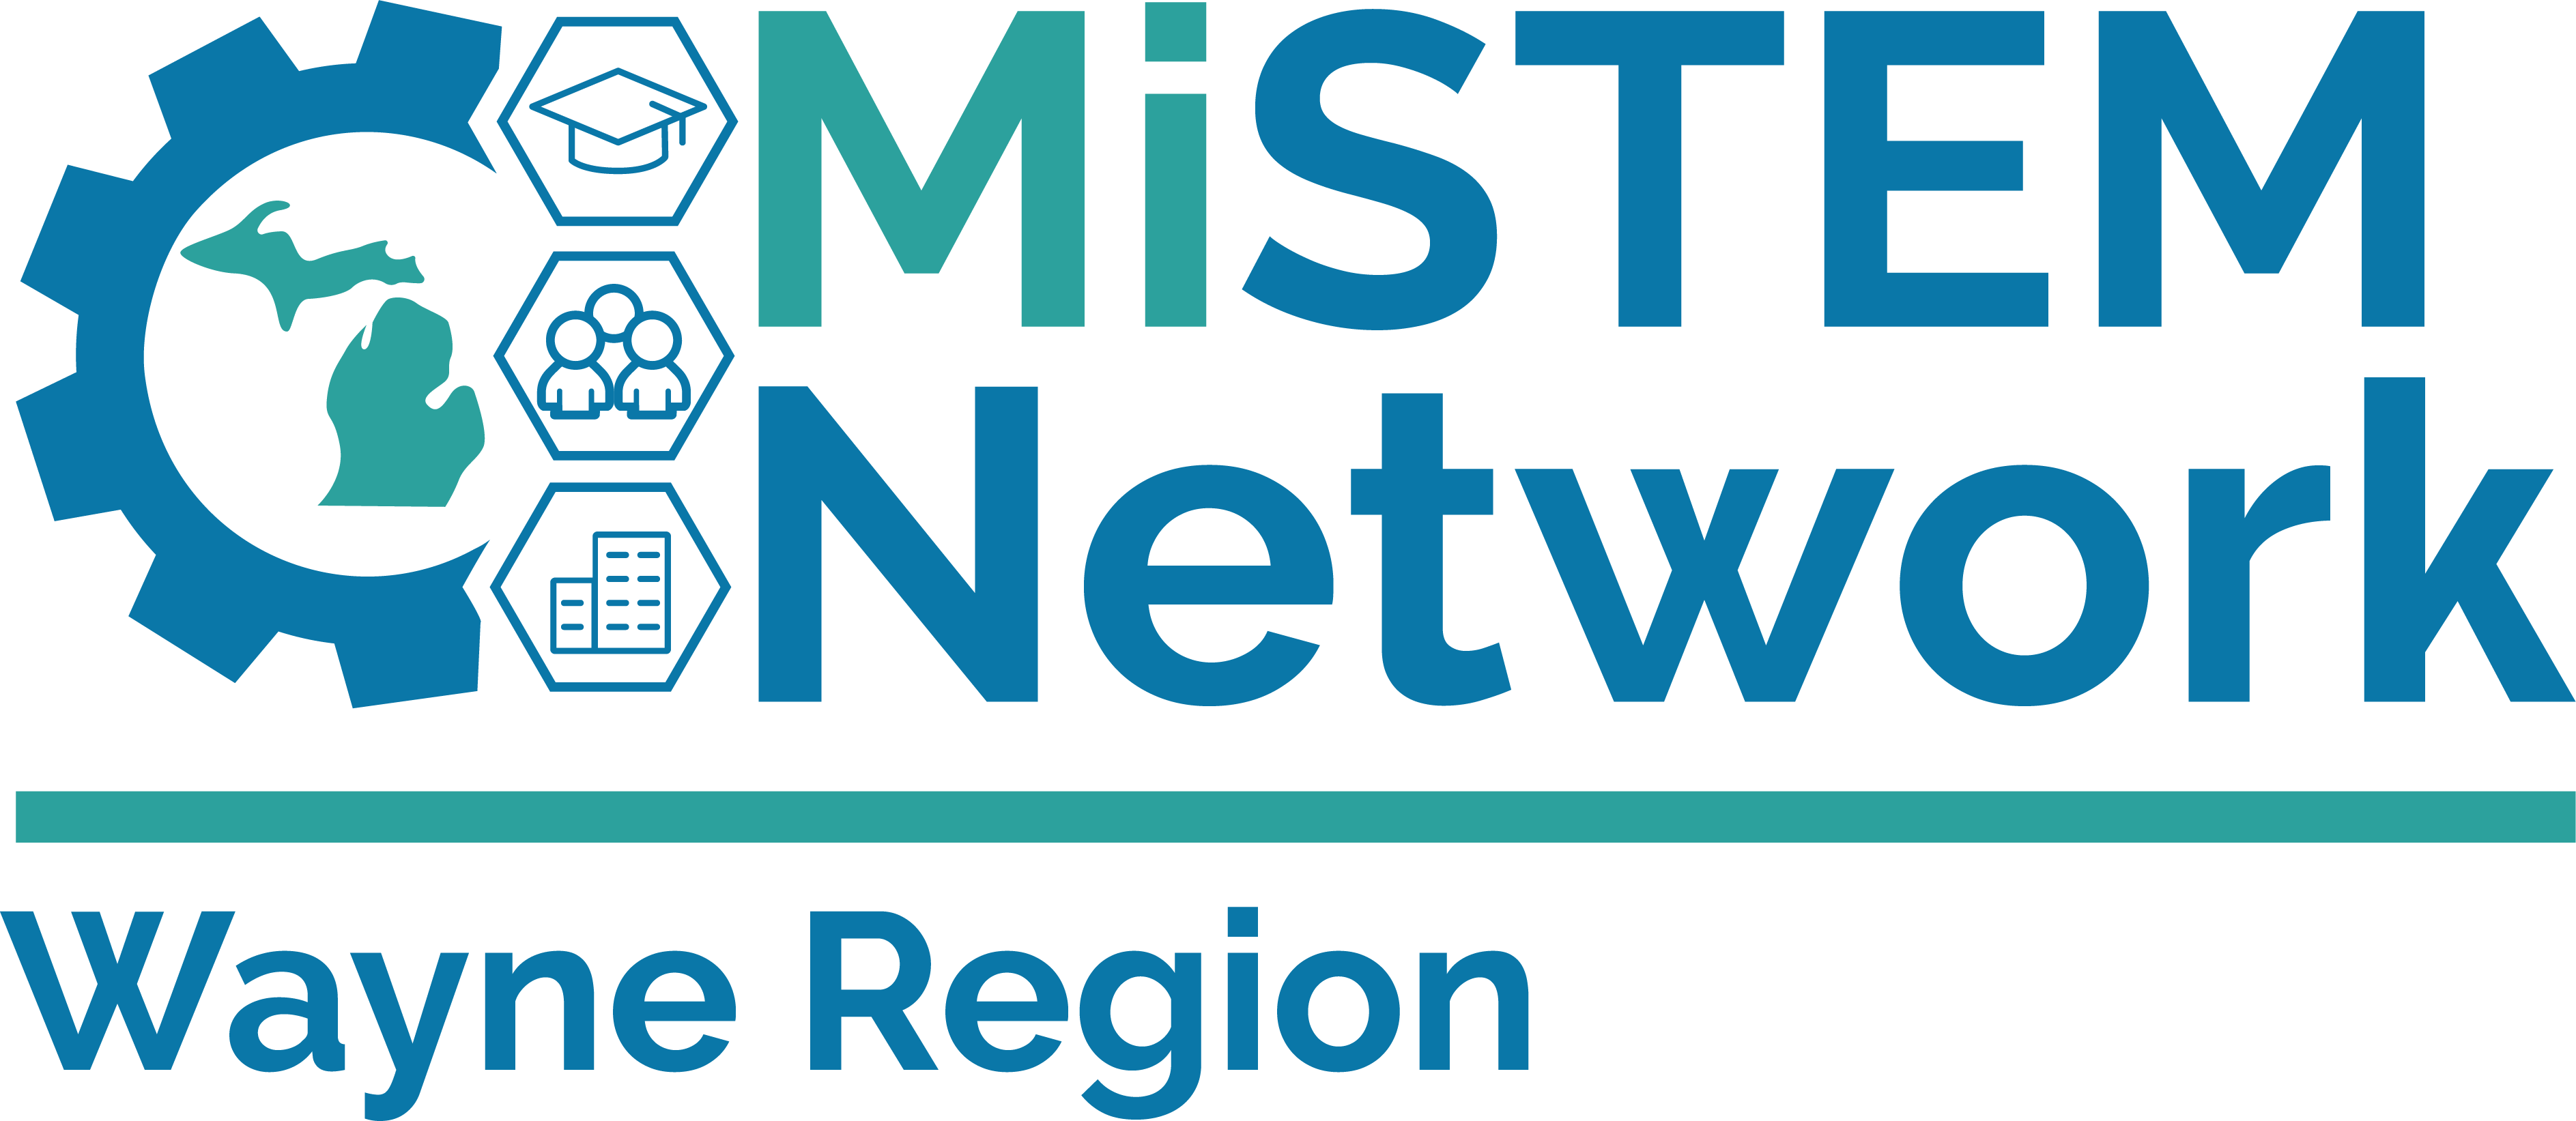 MiSTEM Network Wayne Region